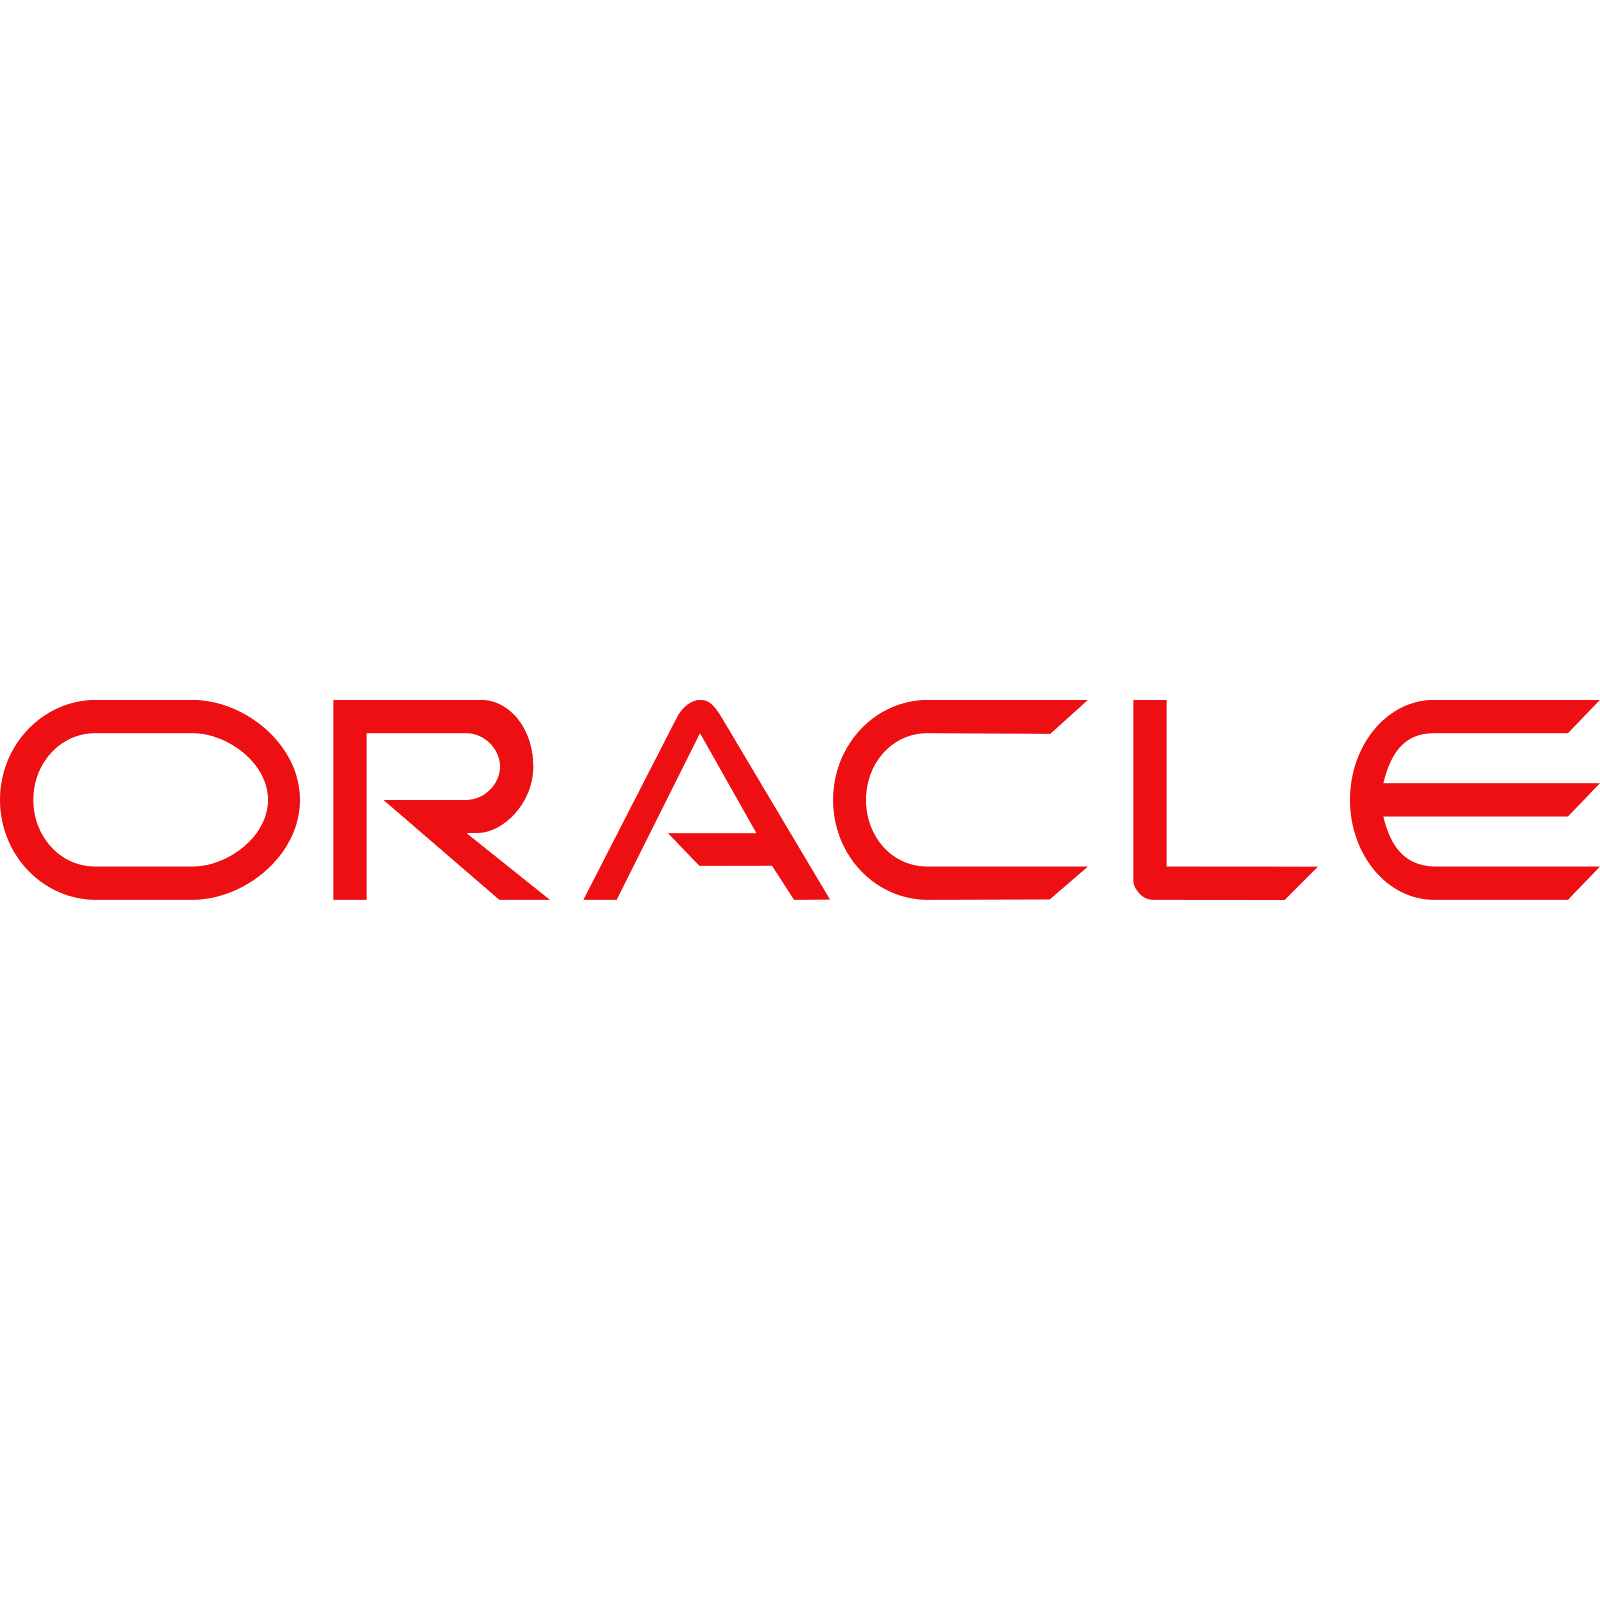 Oracle-logo - Logistyx